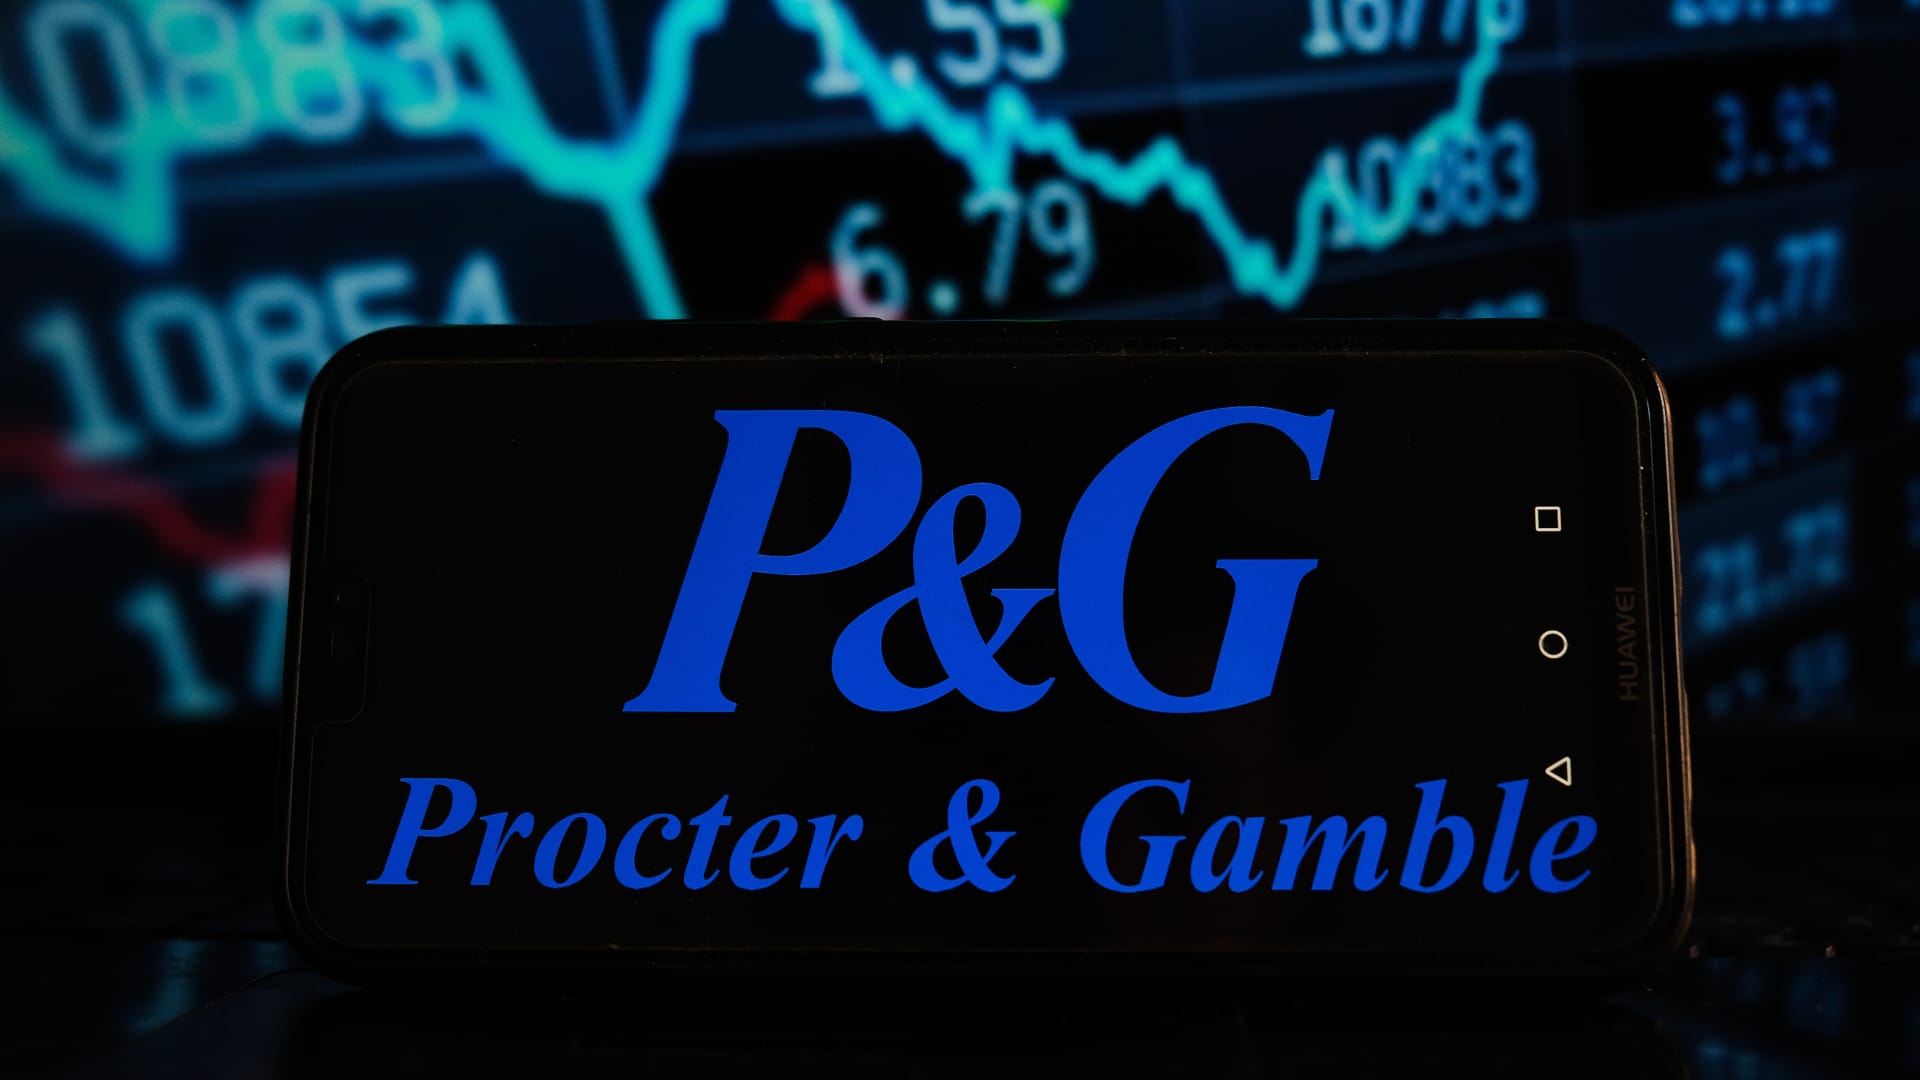 Procter & Gamble, CSX, PPG